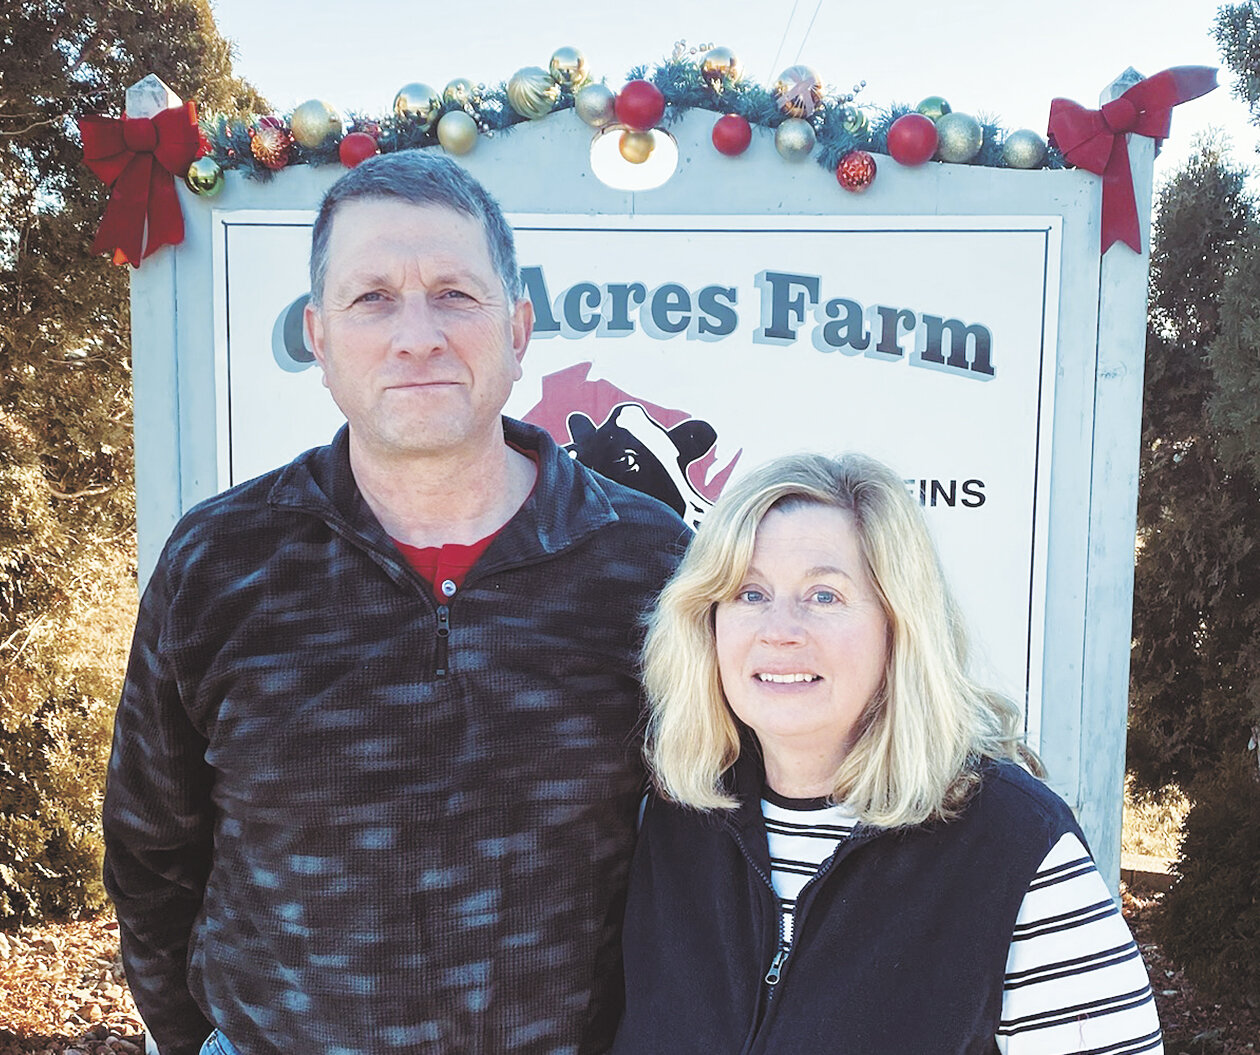 Richard and Kirsten Huth
Gehl Acres Farm
Cameron, Wisconsin
Barron County | 140 cows